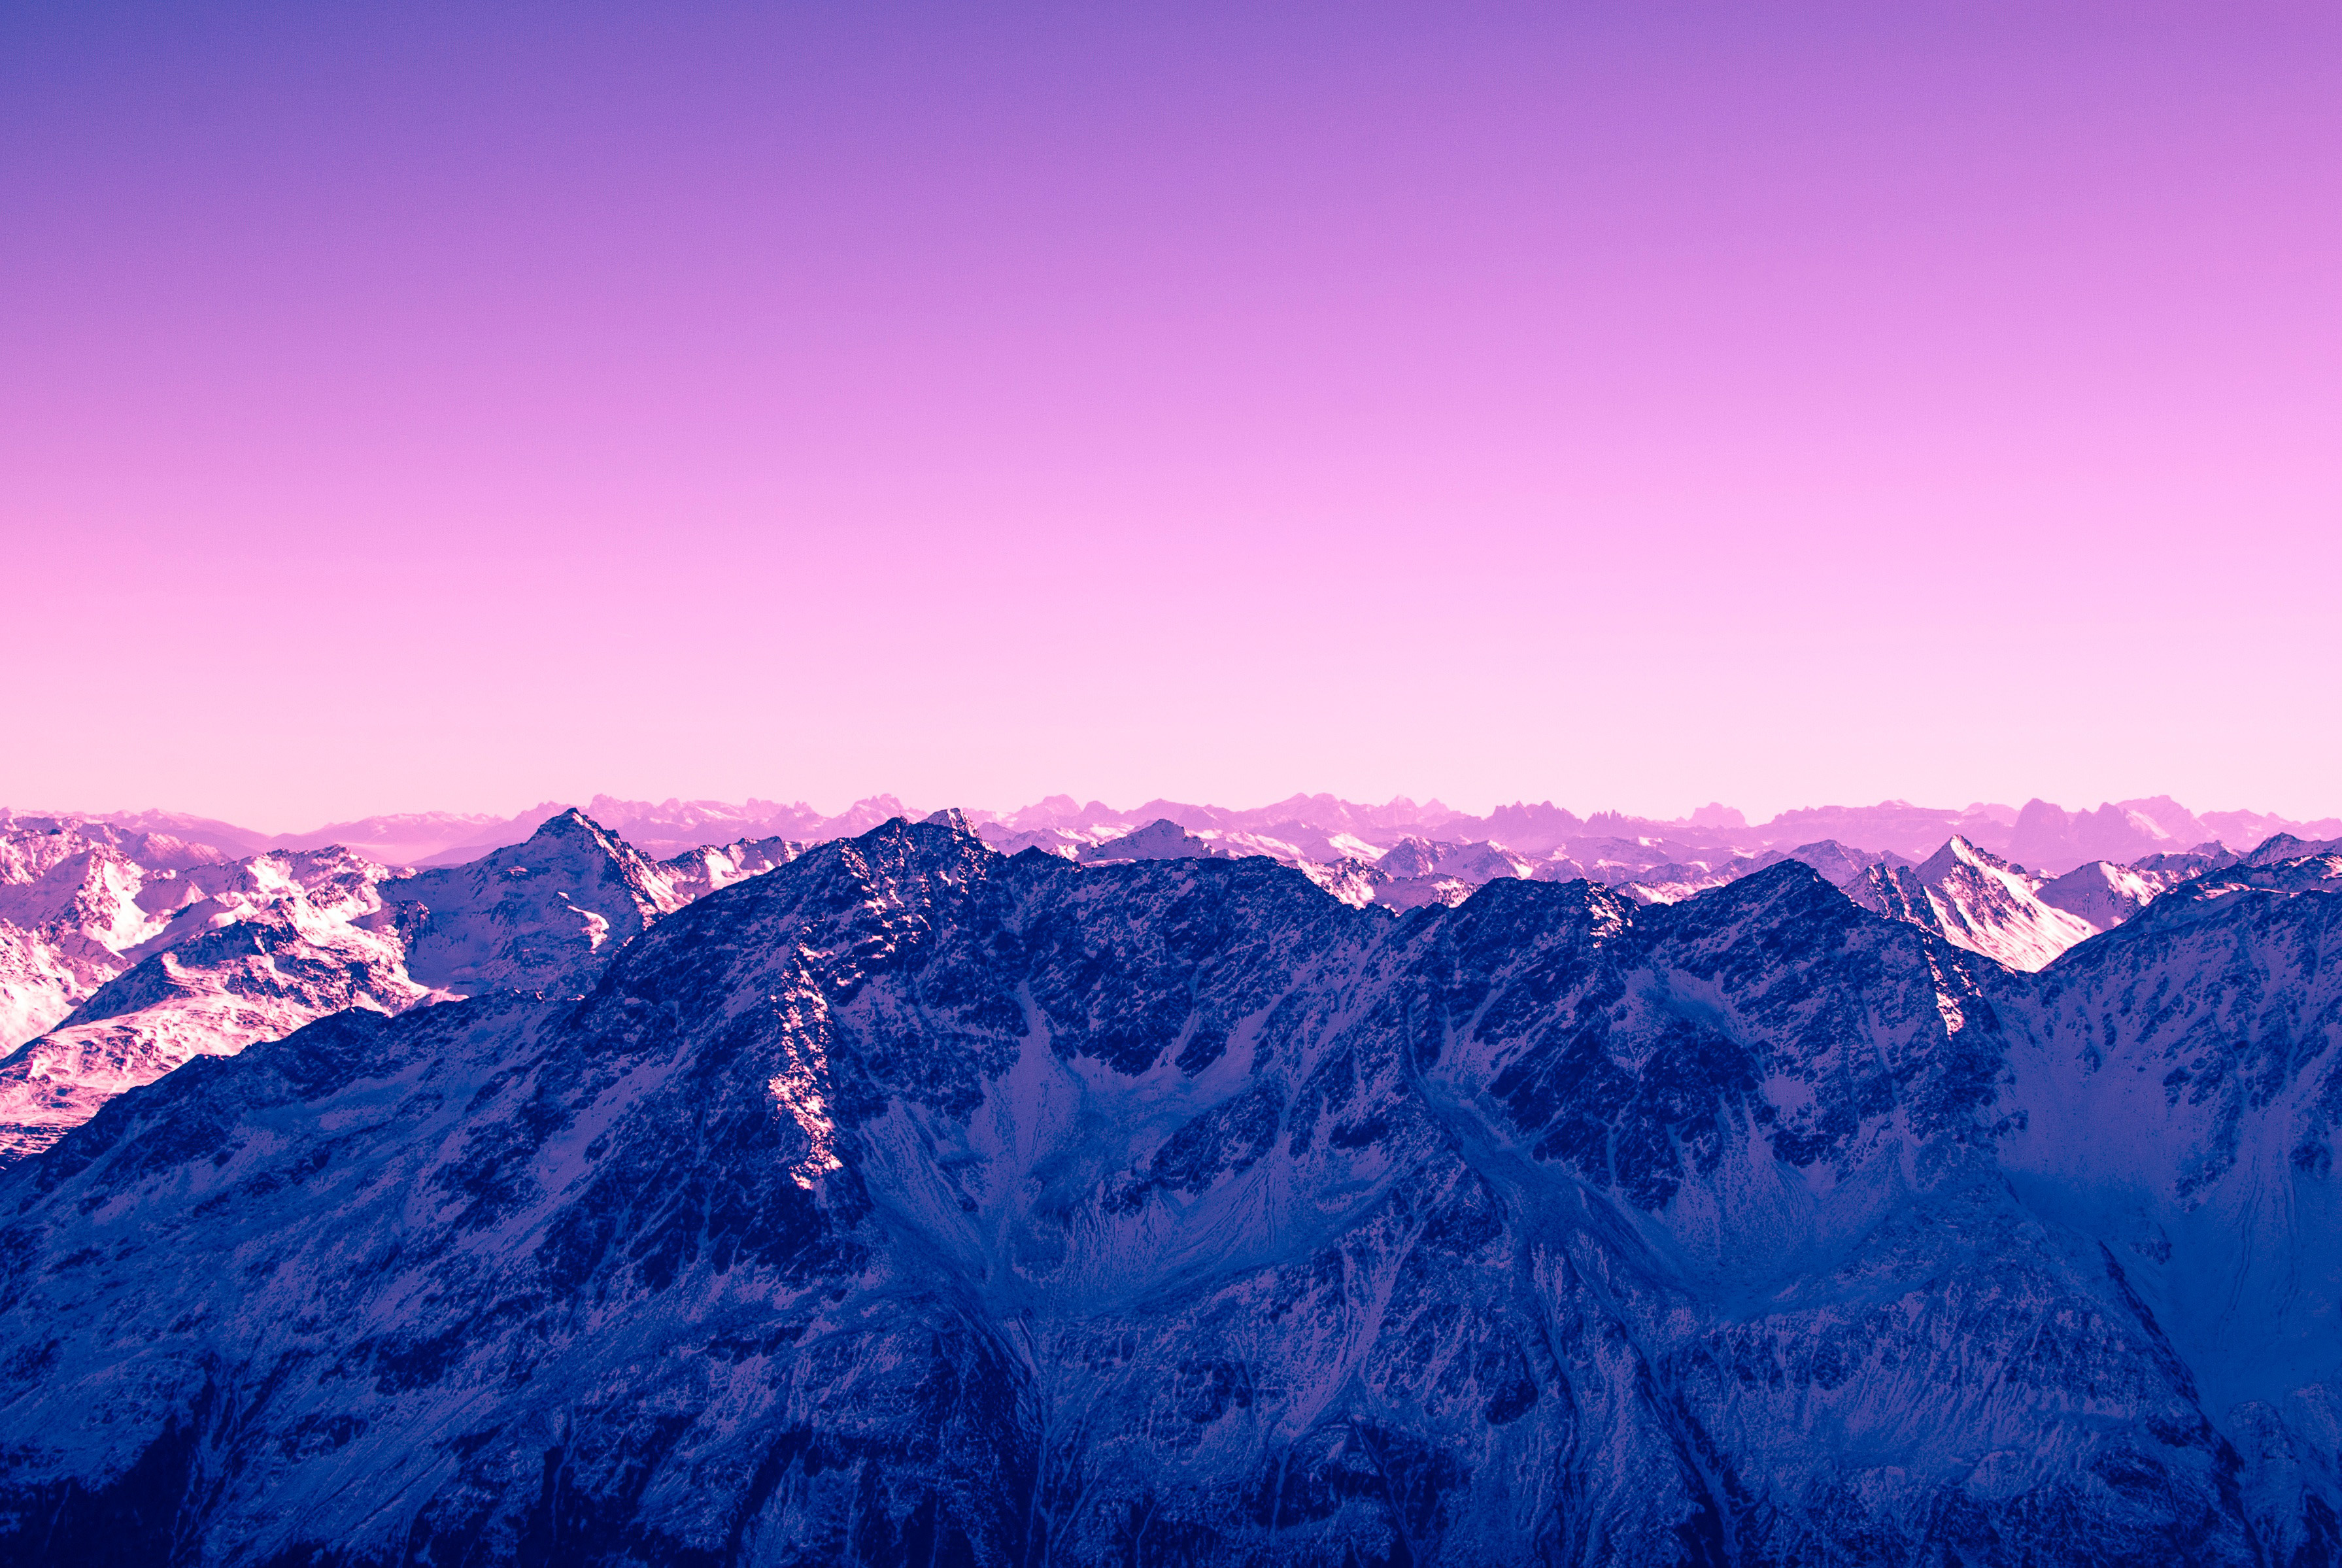 Mountain Landscape Under Purple Sky Image Free Stock Photo Public Domain Photo Cc0 Images